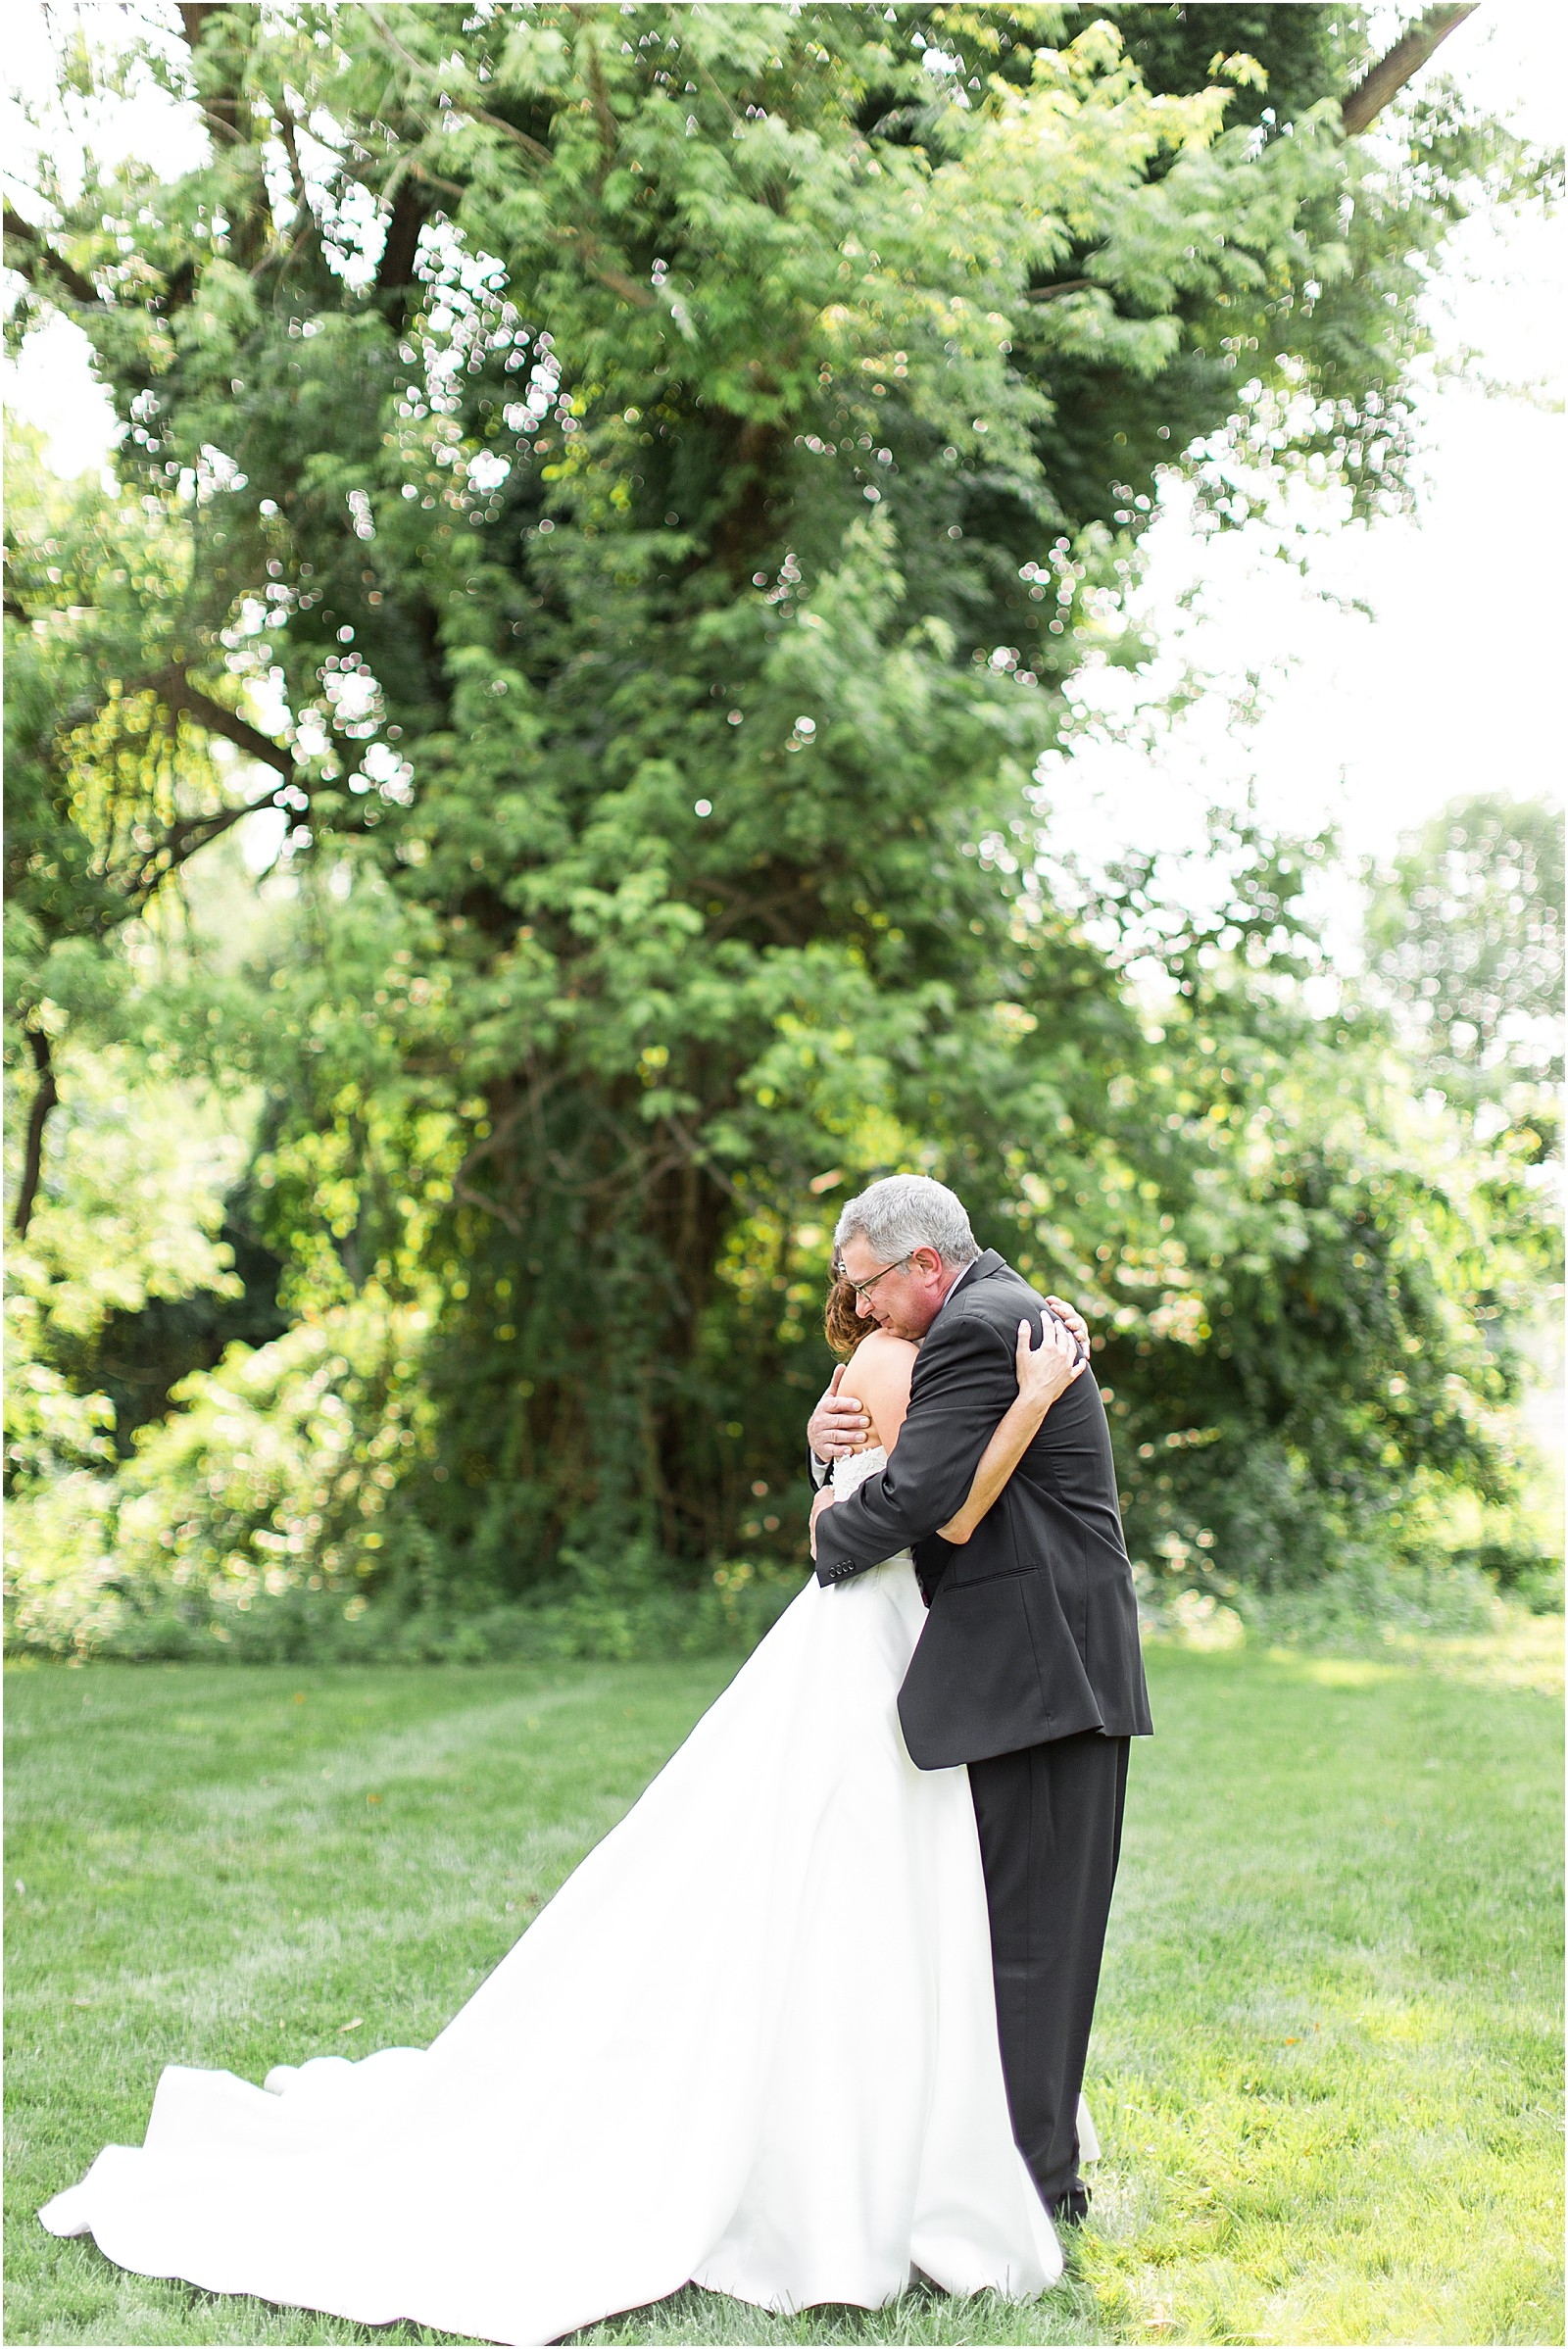 A Evansville Indiana Backyard Wedding | Bailey and Ben 050.jpg